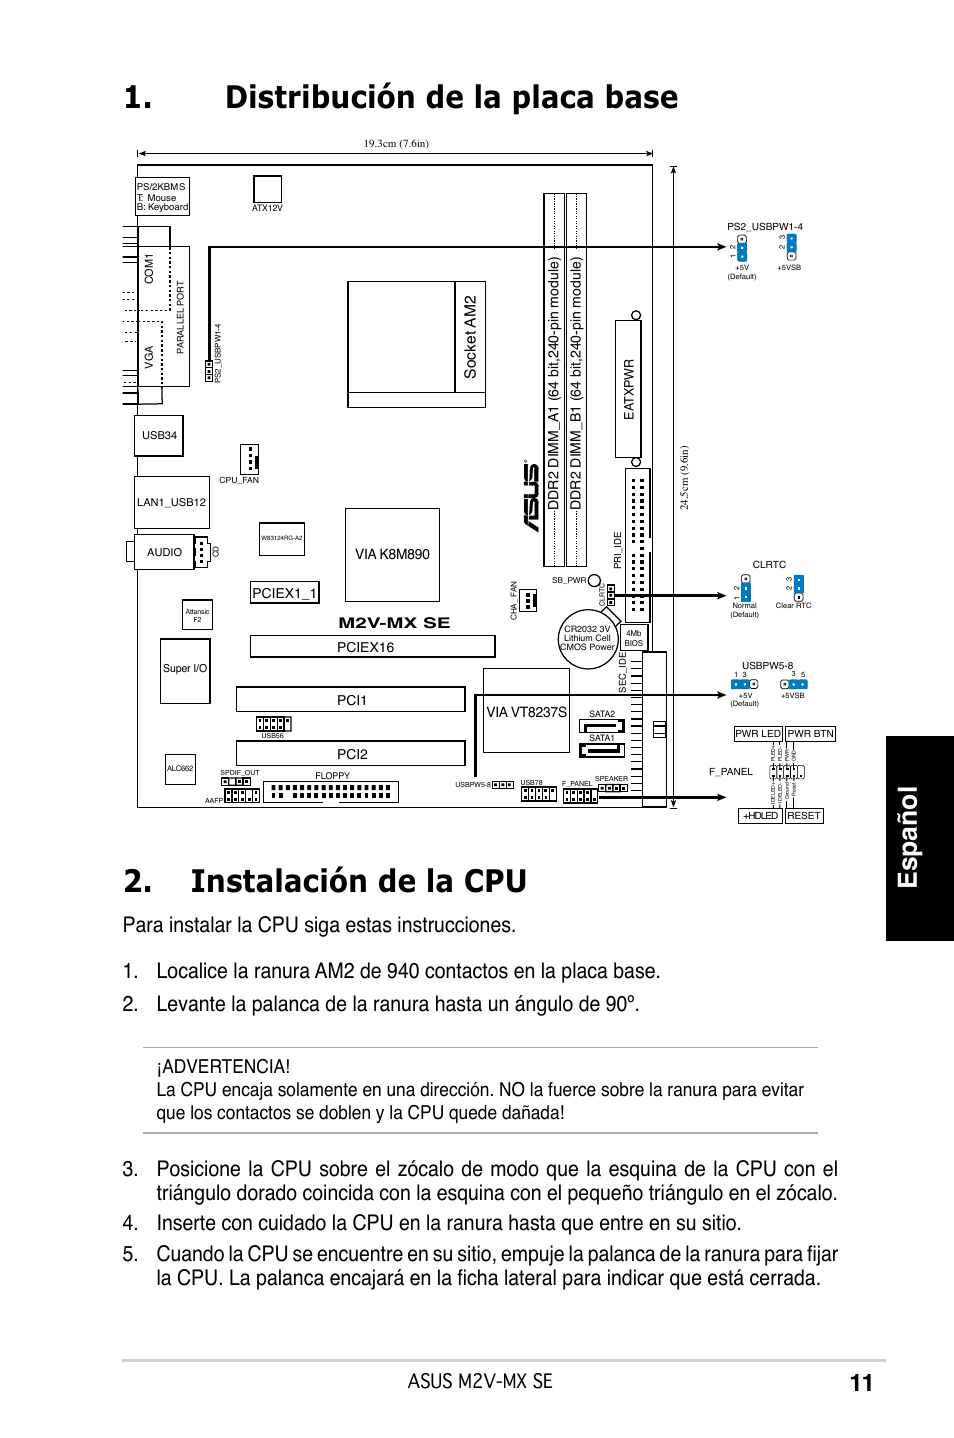 Español, Asus m2v-mx se, Socket am2 | Asus M2V-MX SE User Manual | Page 11  / 38 | Original mode